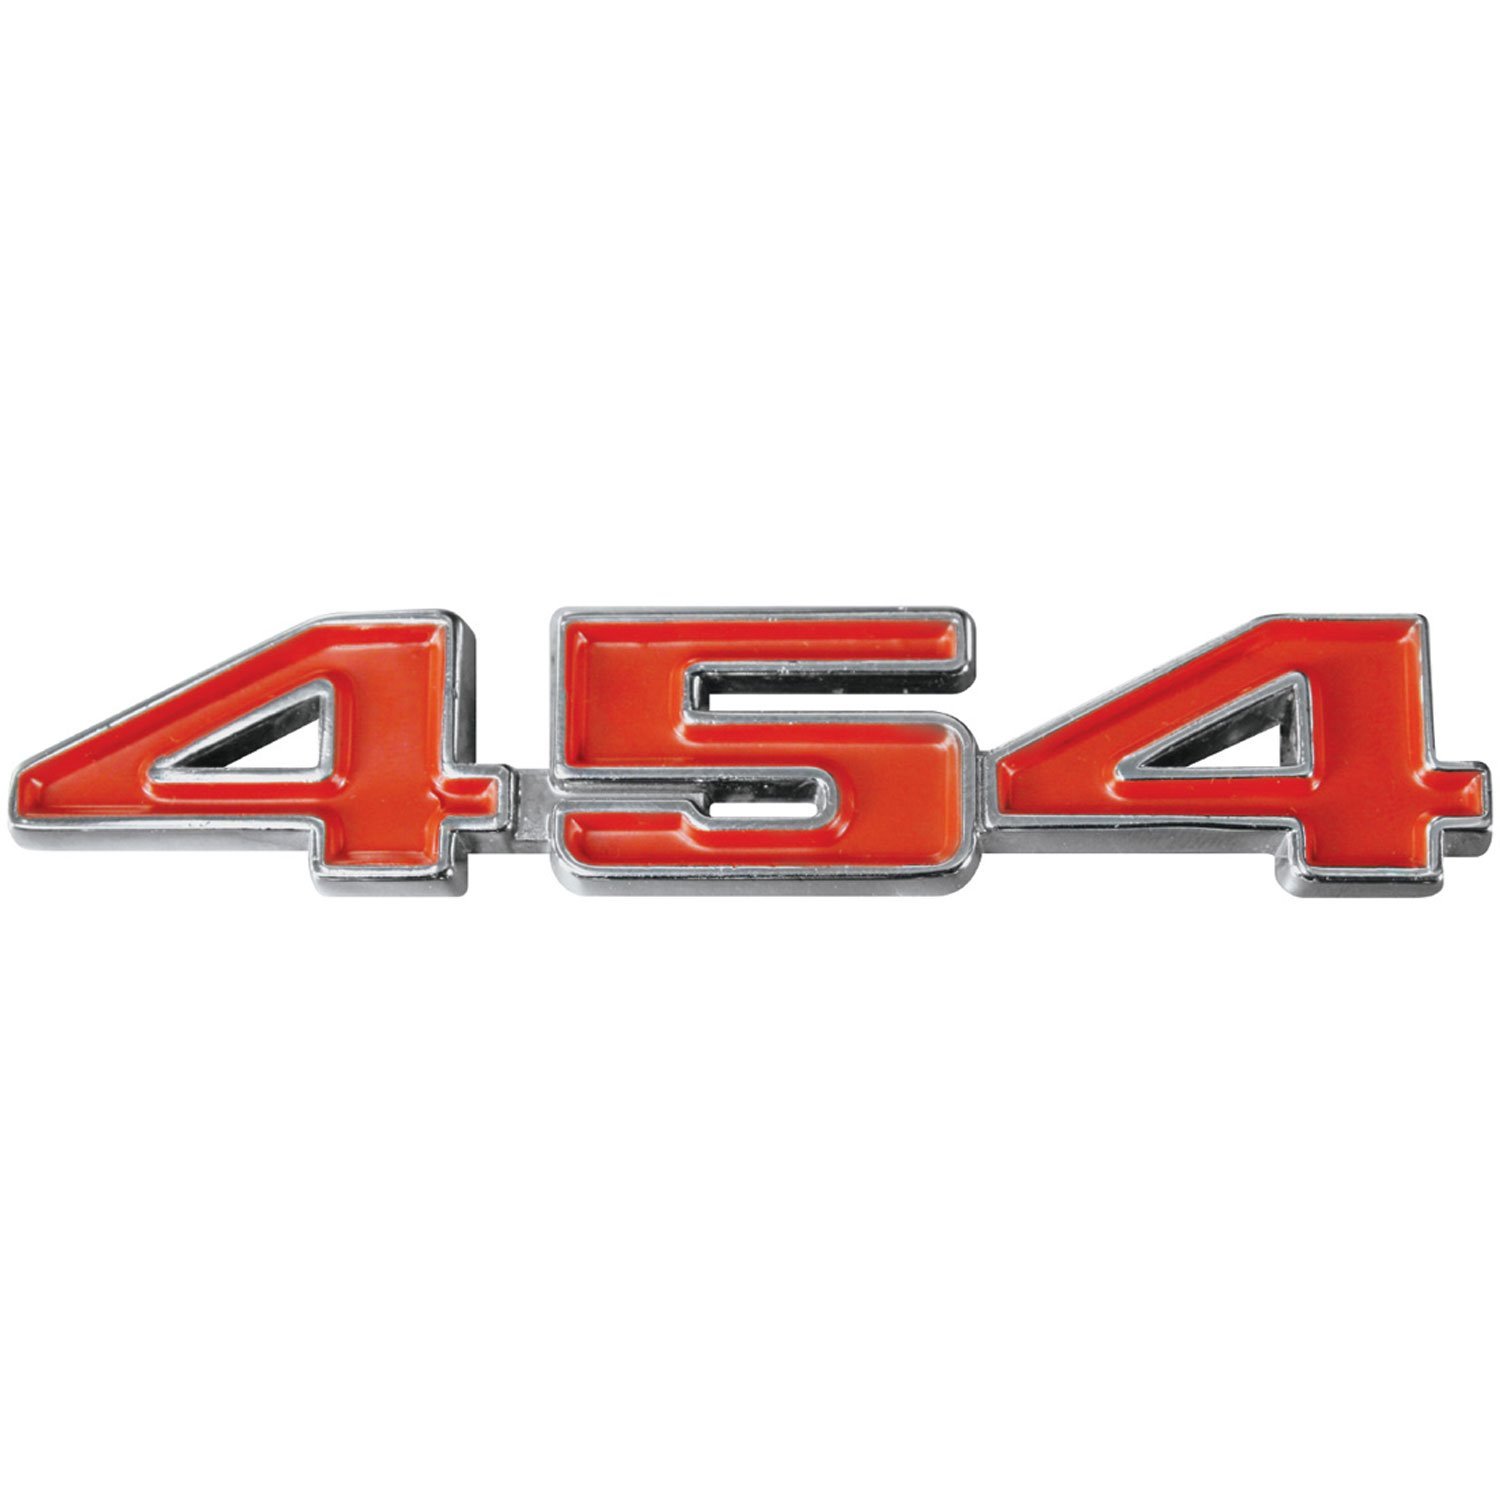 "454" Fender or Tailgate Emblem 1970-72 Chevelle/El Camino/Monte Carlo SS